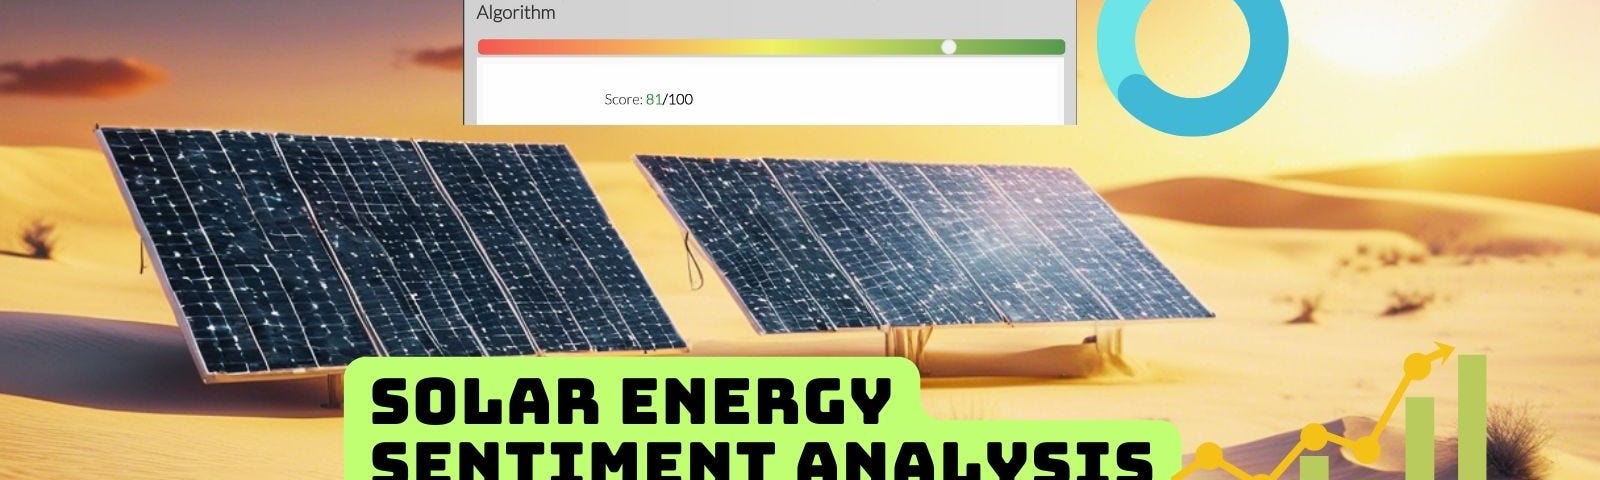 Solar Energy — Sentiment Analysis for Business Intelligence, predicting trends, content ideas… Source: https://ascendance.dev/sentiment_analysis/indicator/solar-energy